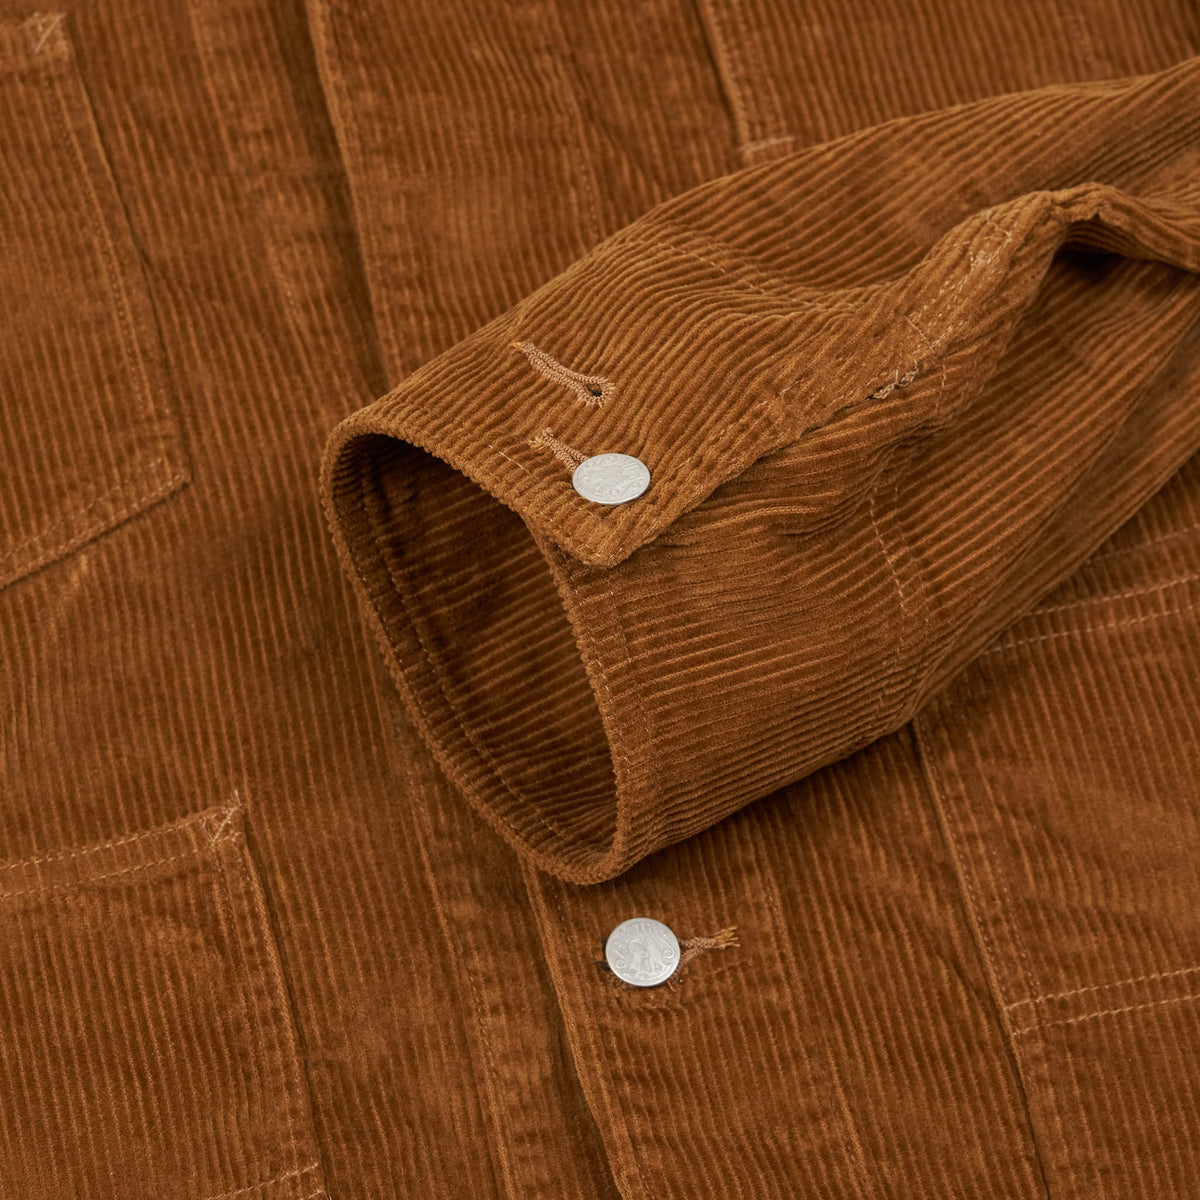 Needles Japan x Smith&#39;s Corduroy Workwear Coverall Jacket